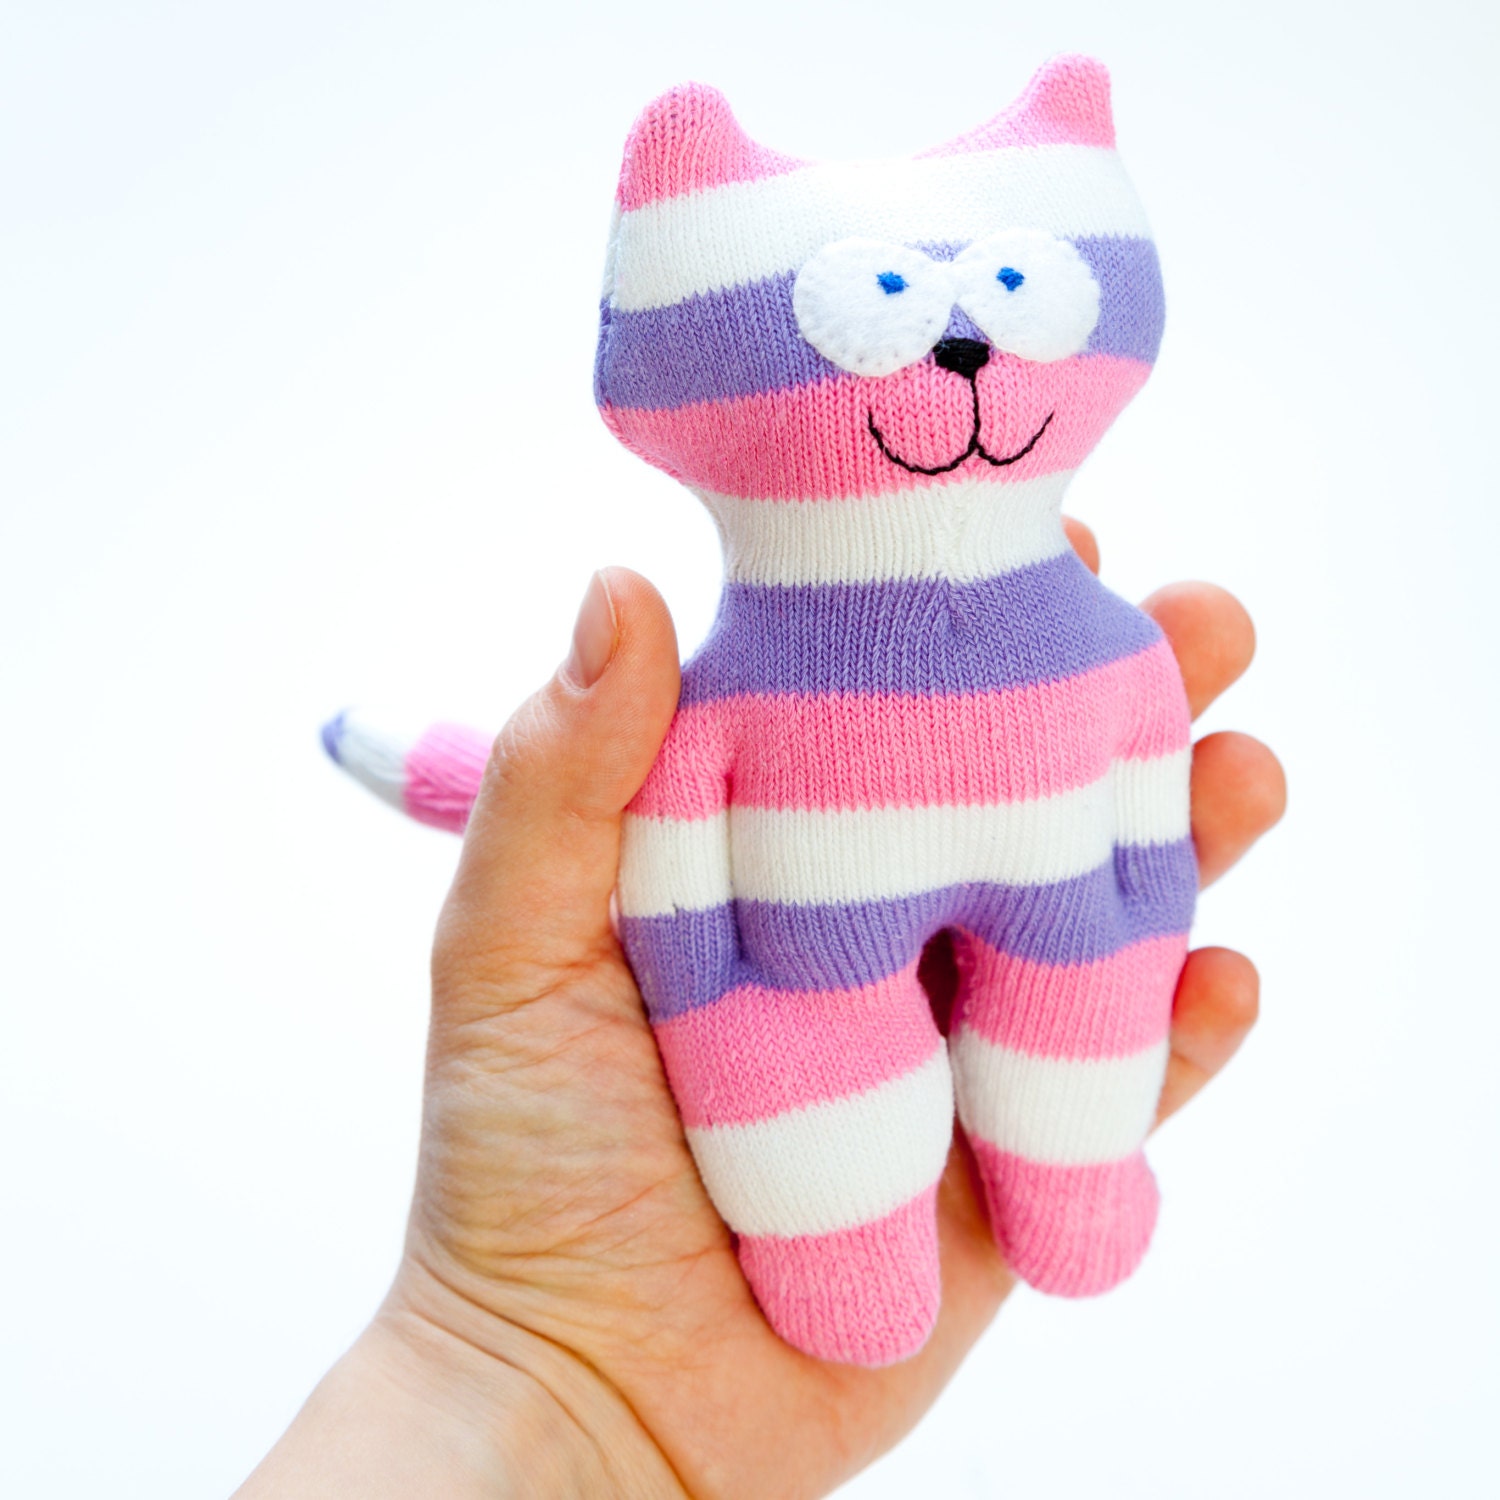 Cat Sock Toy Stuffed Animal Doll Small by moniminiart on Etsy